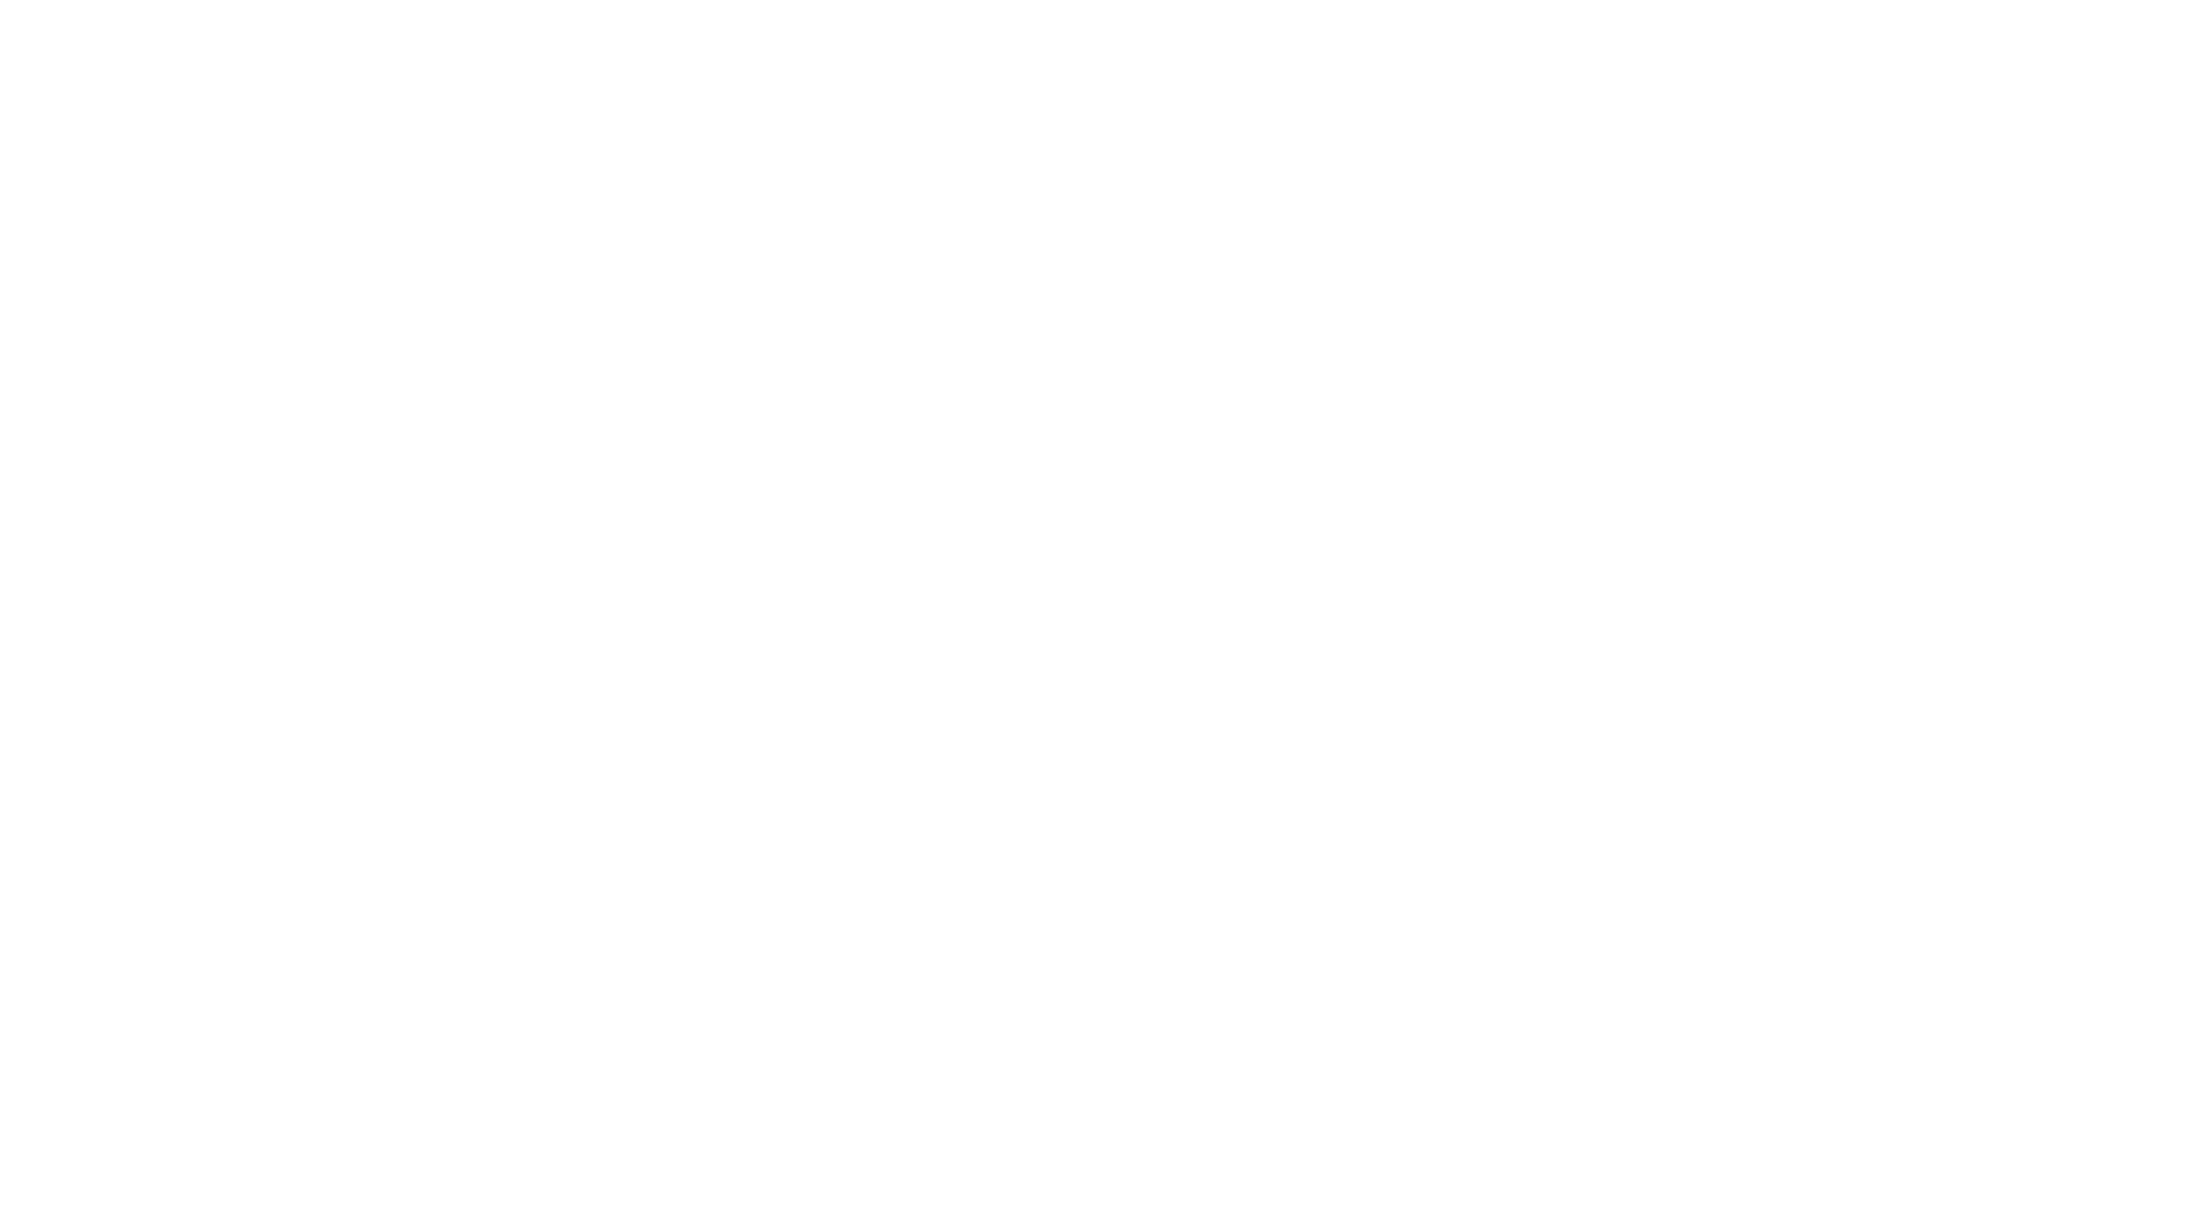 Antique Wooden Floors Ltd